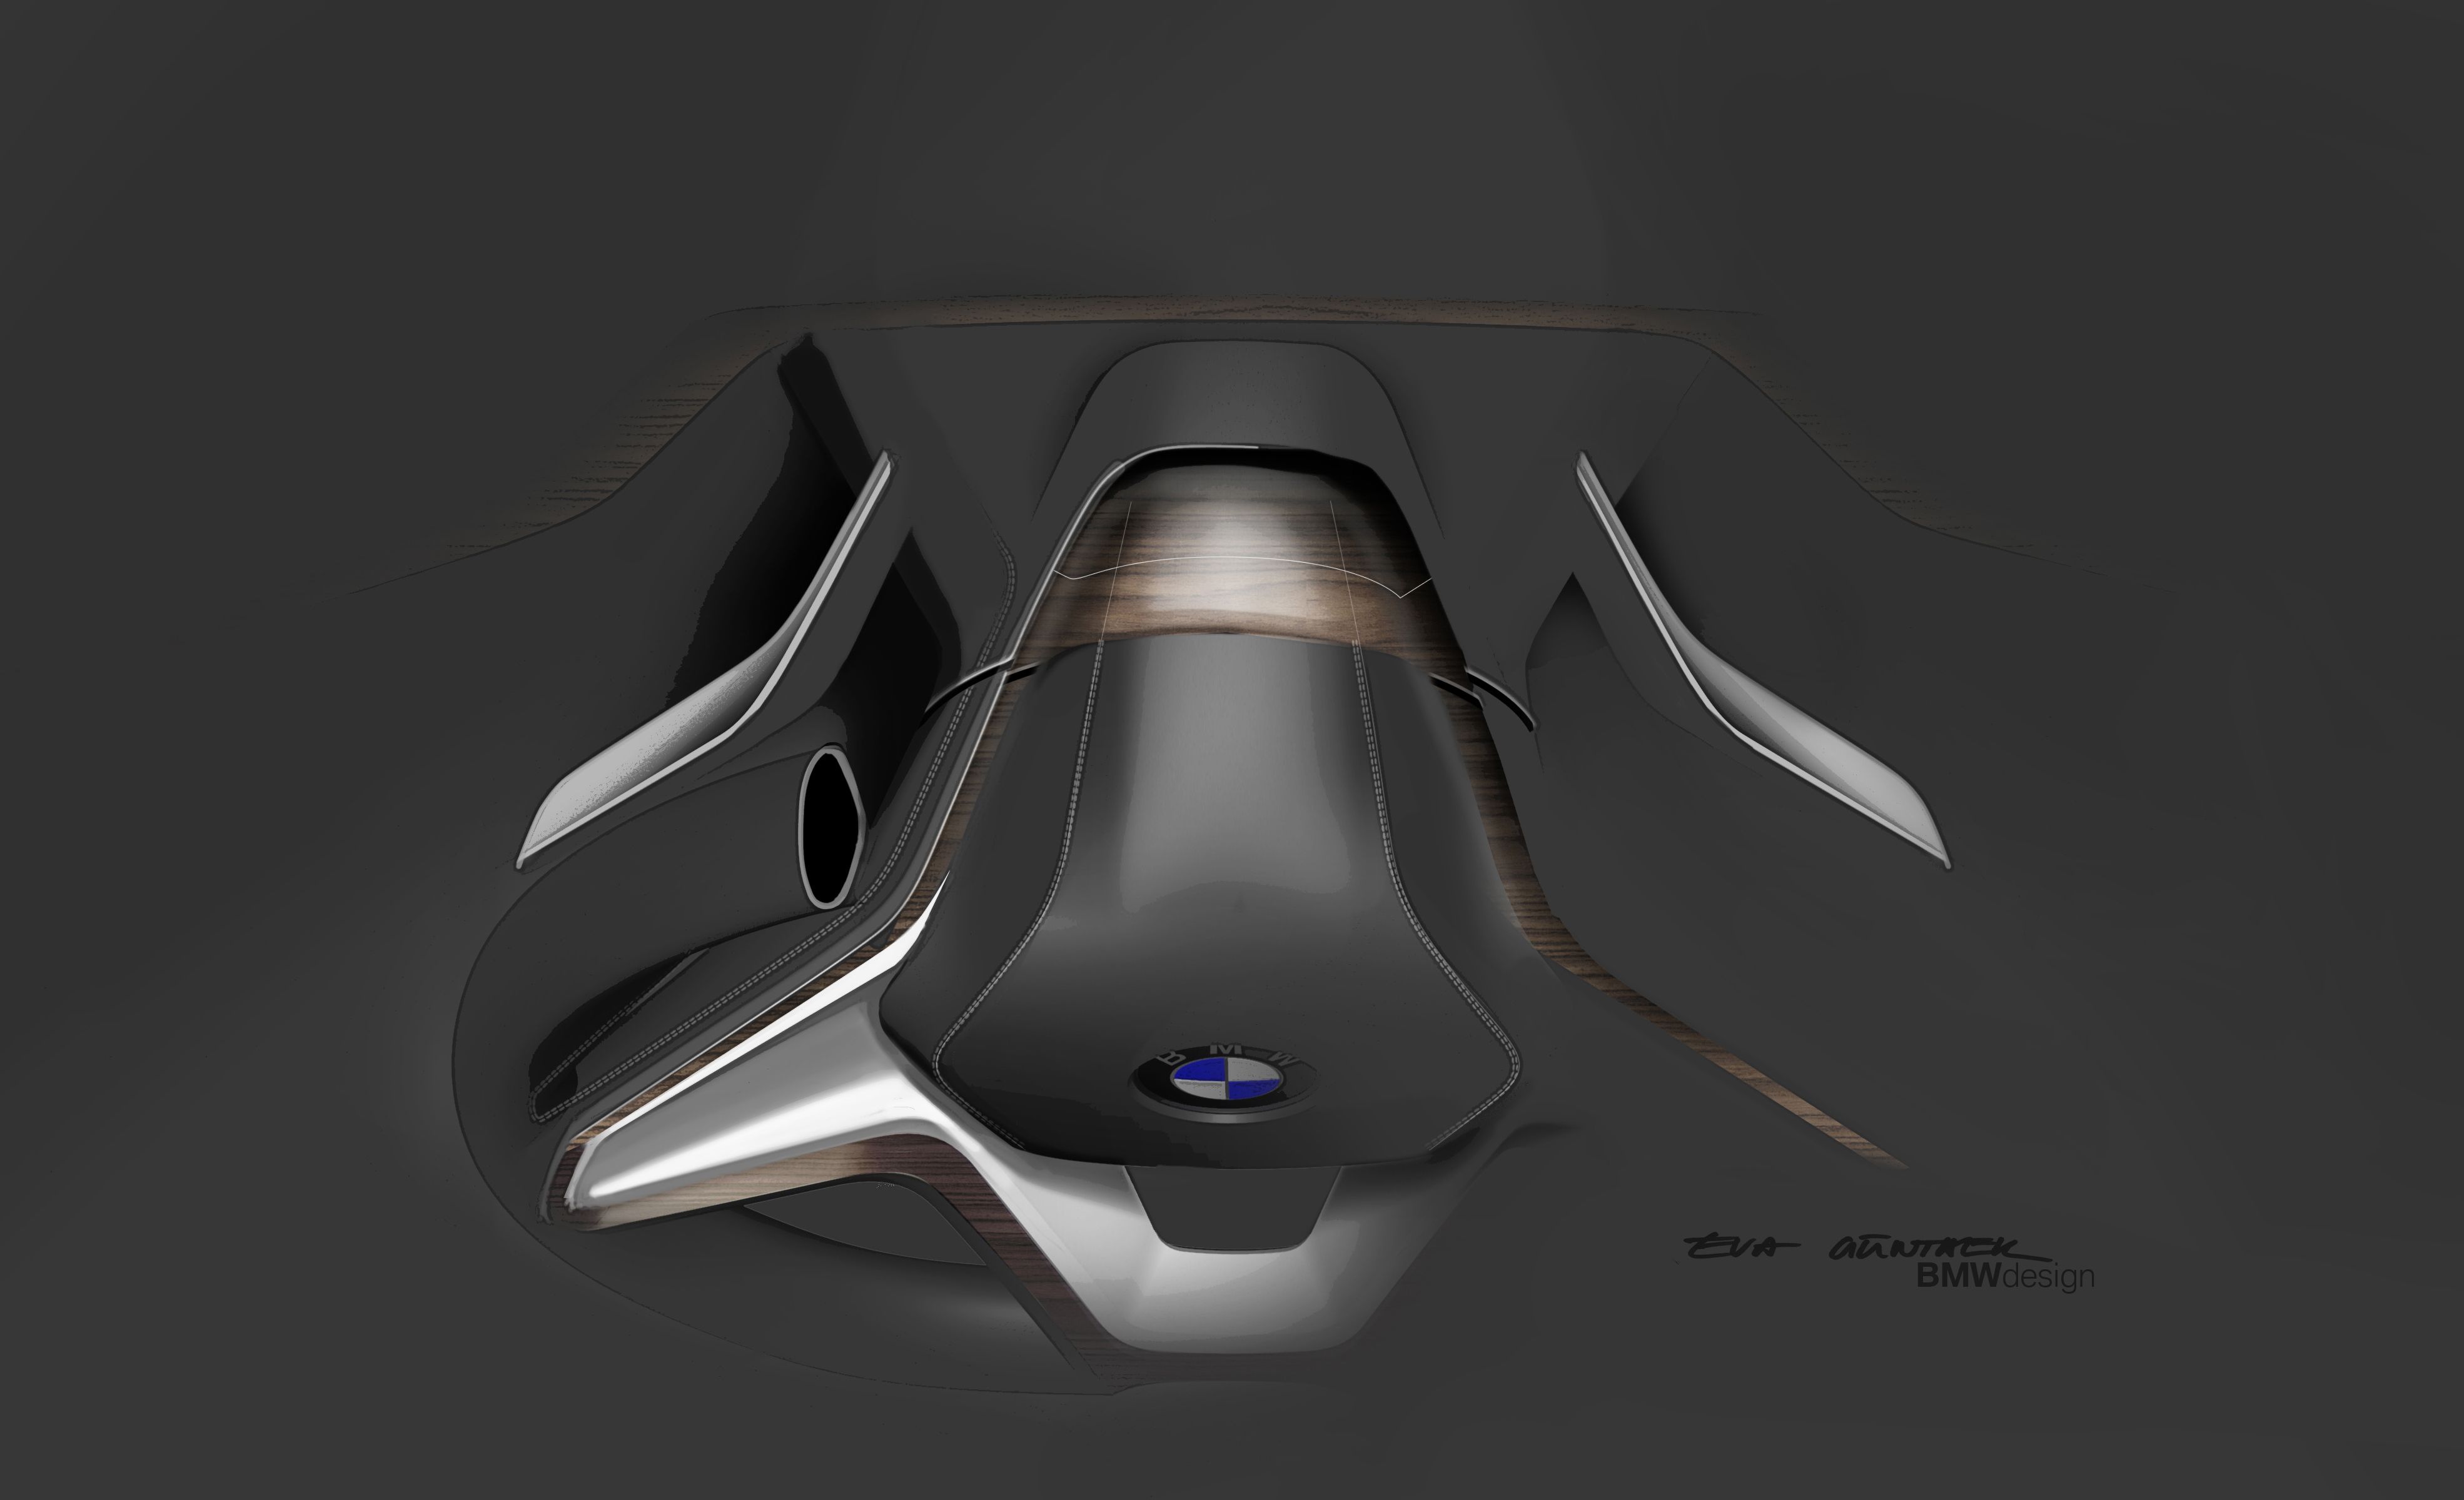 2014 BMW Vision Future Luxury